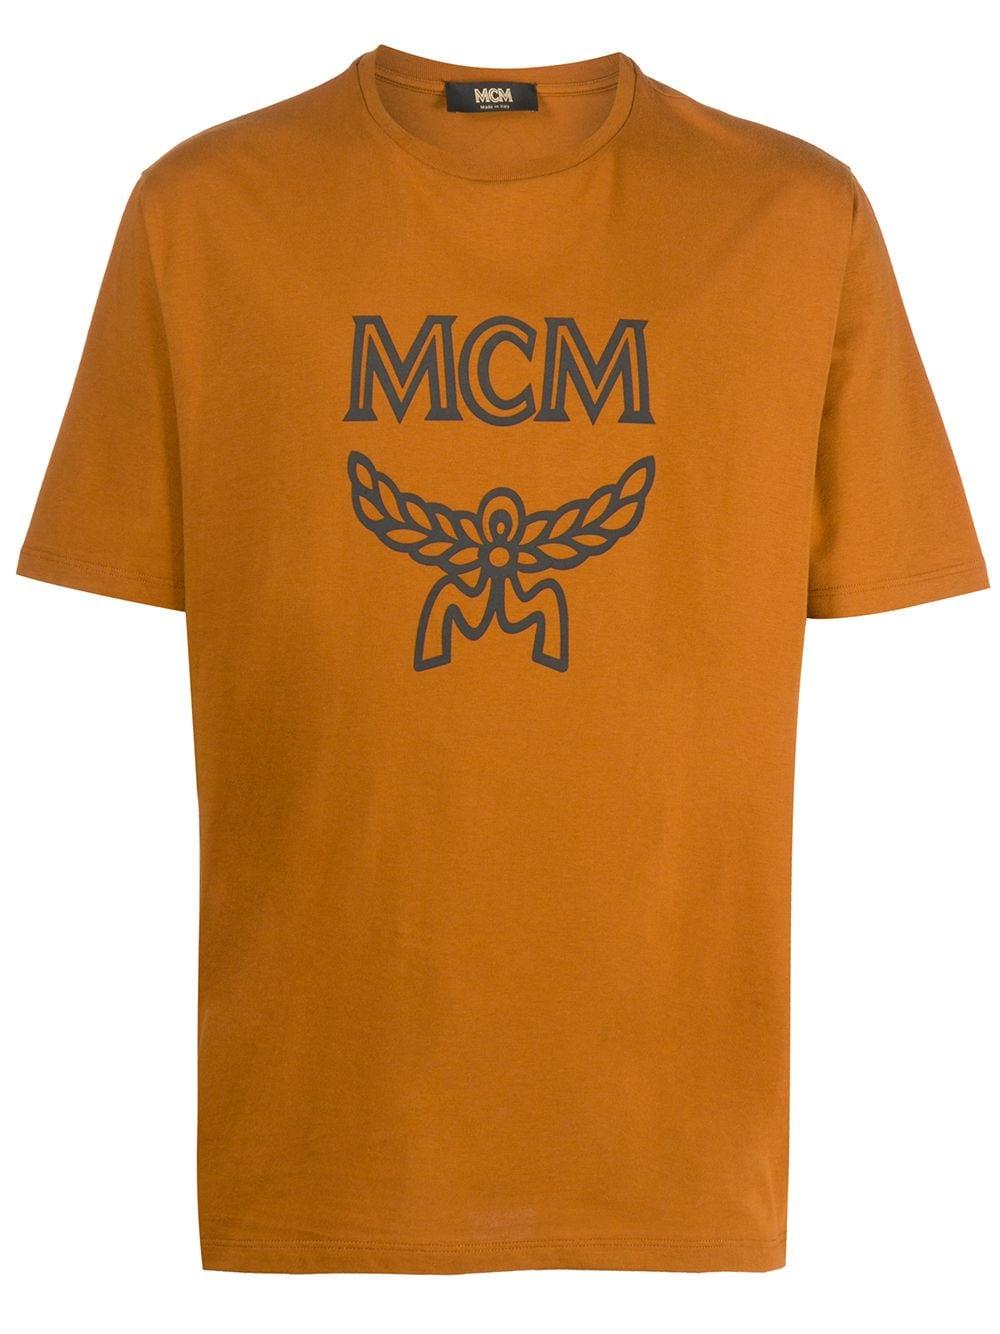 MCM Cotton Logo-print T-shirt in Orange for Men - Lyst